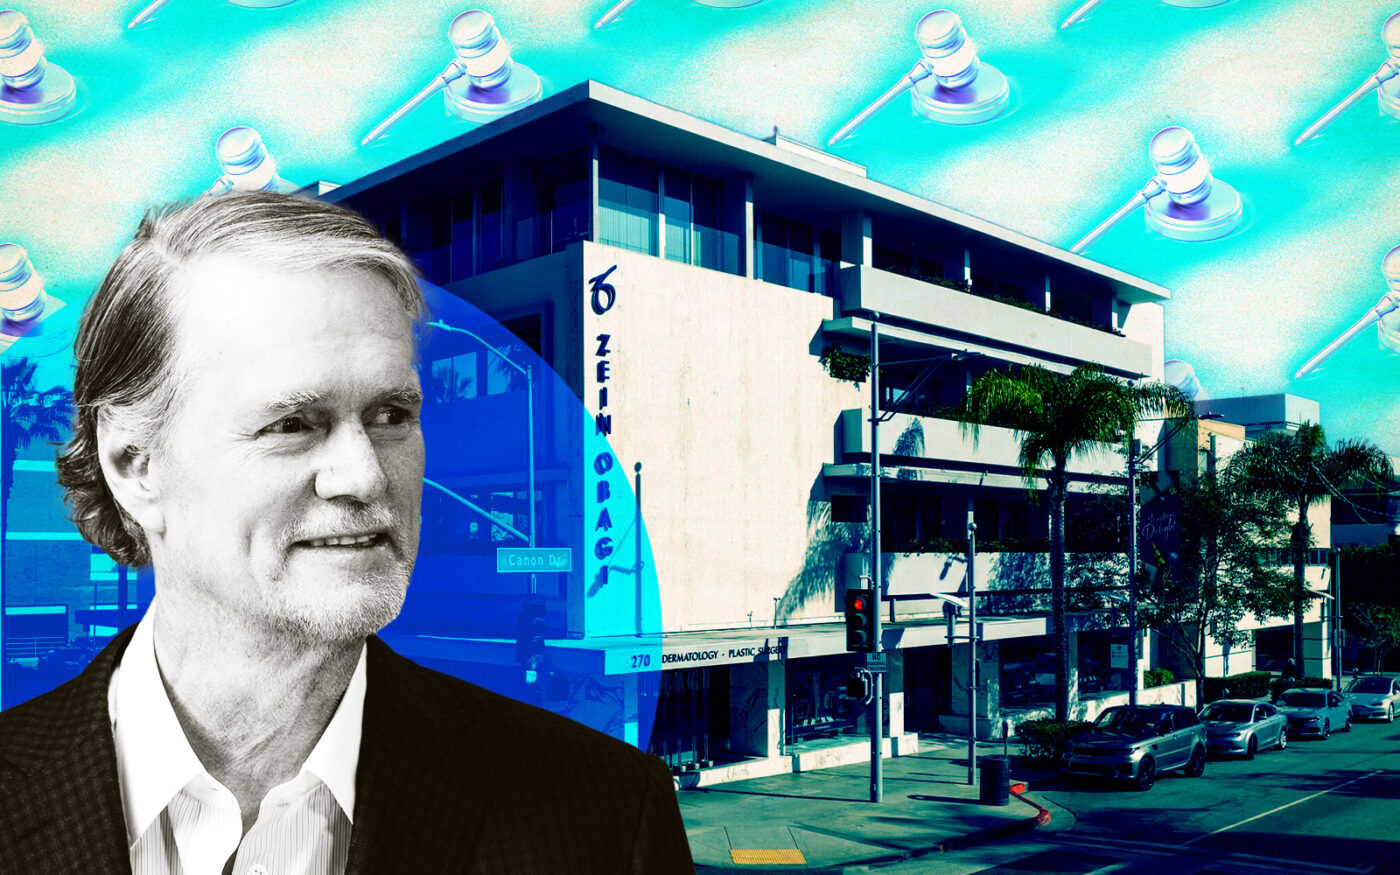 Hilton & Hyland Sues Co-Founder Rick Hilton’s New Agency